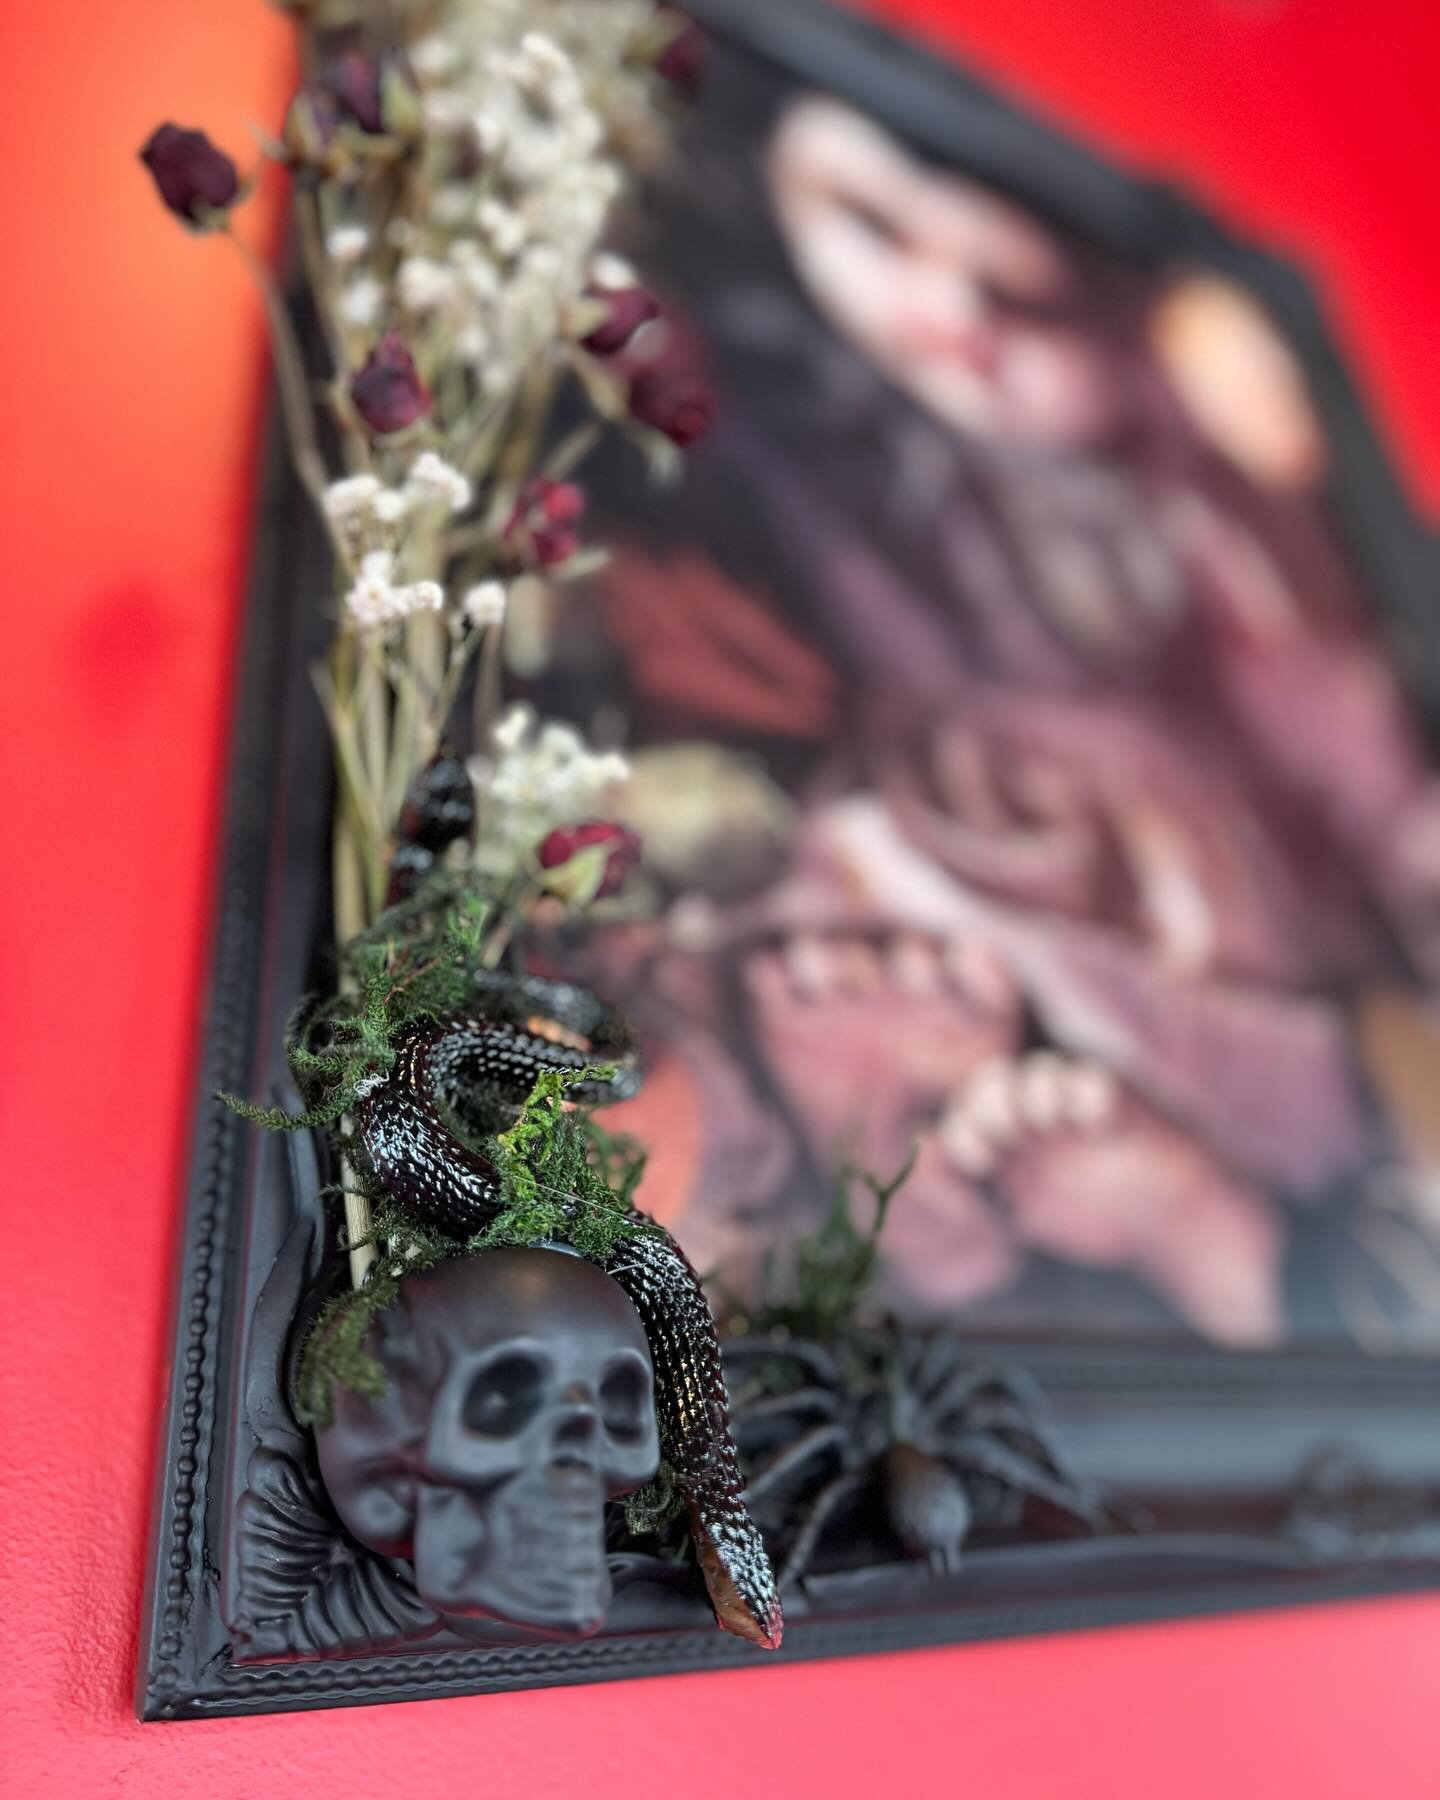 𝐶𝑟𝑒𝑒𝑝𝑦 𝐷𝑜𝑙𝑙 𝐻𝑎𝑛𝑔𝑖𝑛𝑔𝑠 𖨆
ᴱᶻᴹᴱᴿᴬᴸᴰᴬ ᴮᴸᴬᶜᴷ 
єzz&iacute;є вl&sigma;&sigma;m ғraмe⁂
www.Ezmeraldablack.com 
 ☽ᐁ&there4;ꪉ𖠋  ᵖʰᵒᵗᵒᵍ @cevet_jones 
#victorian #creepydoll #deadflowers #asteticphotography #haunted #witches #twinflame  #twinf